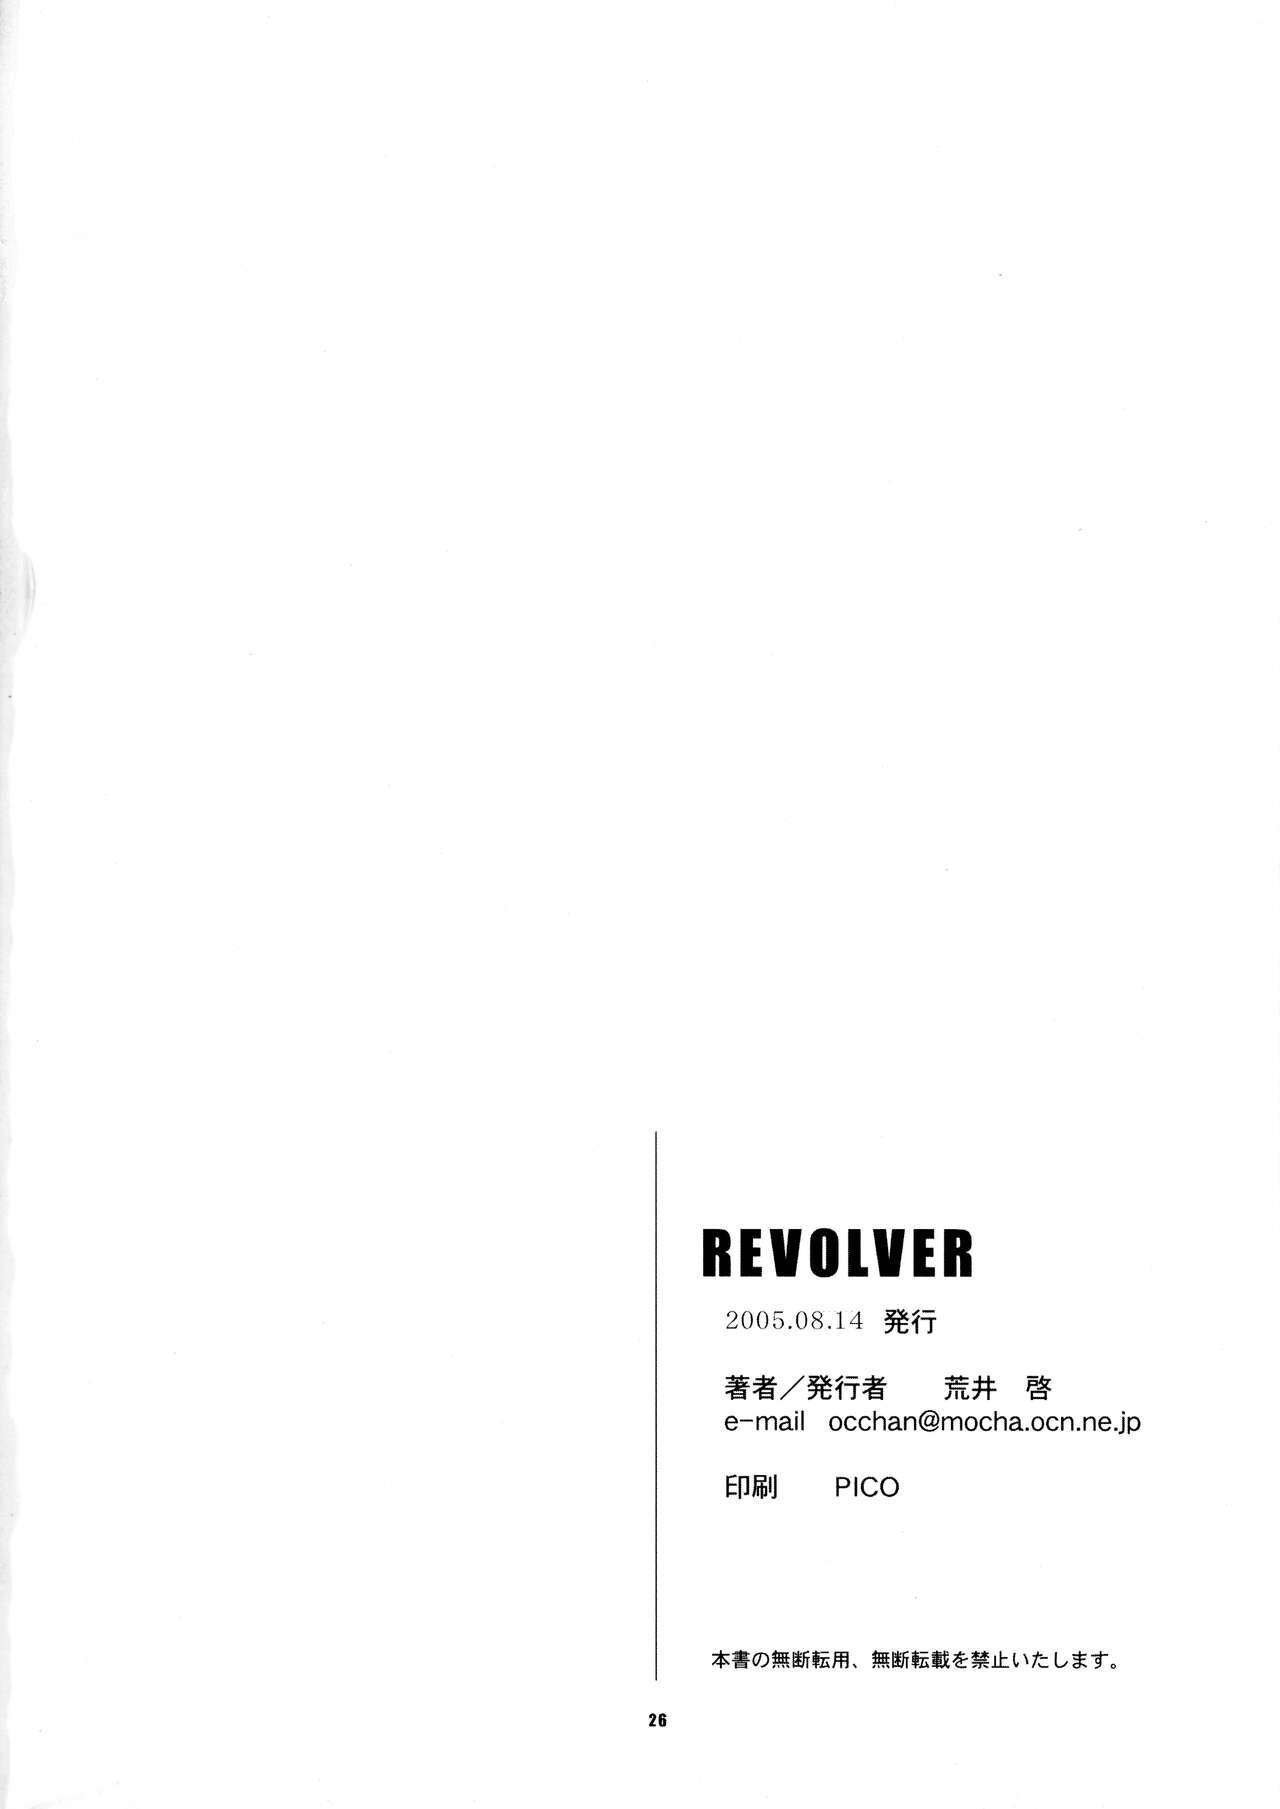 Revolver 25